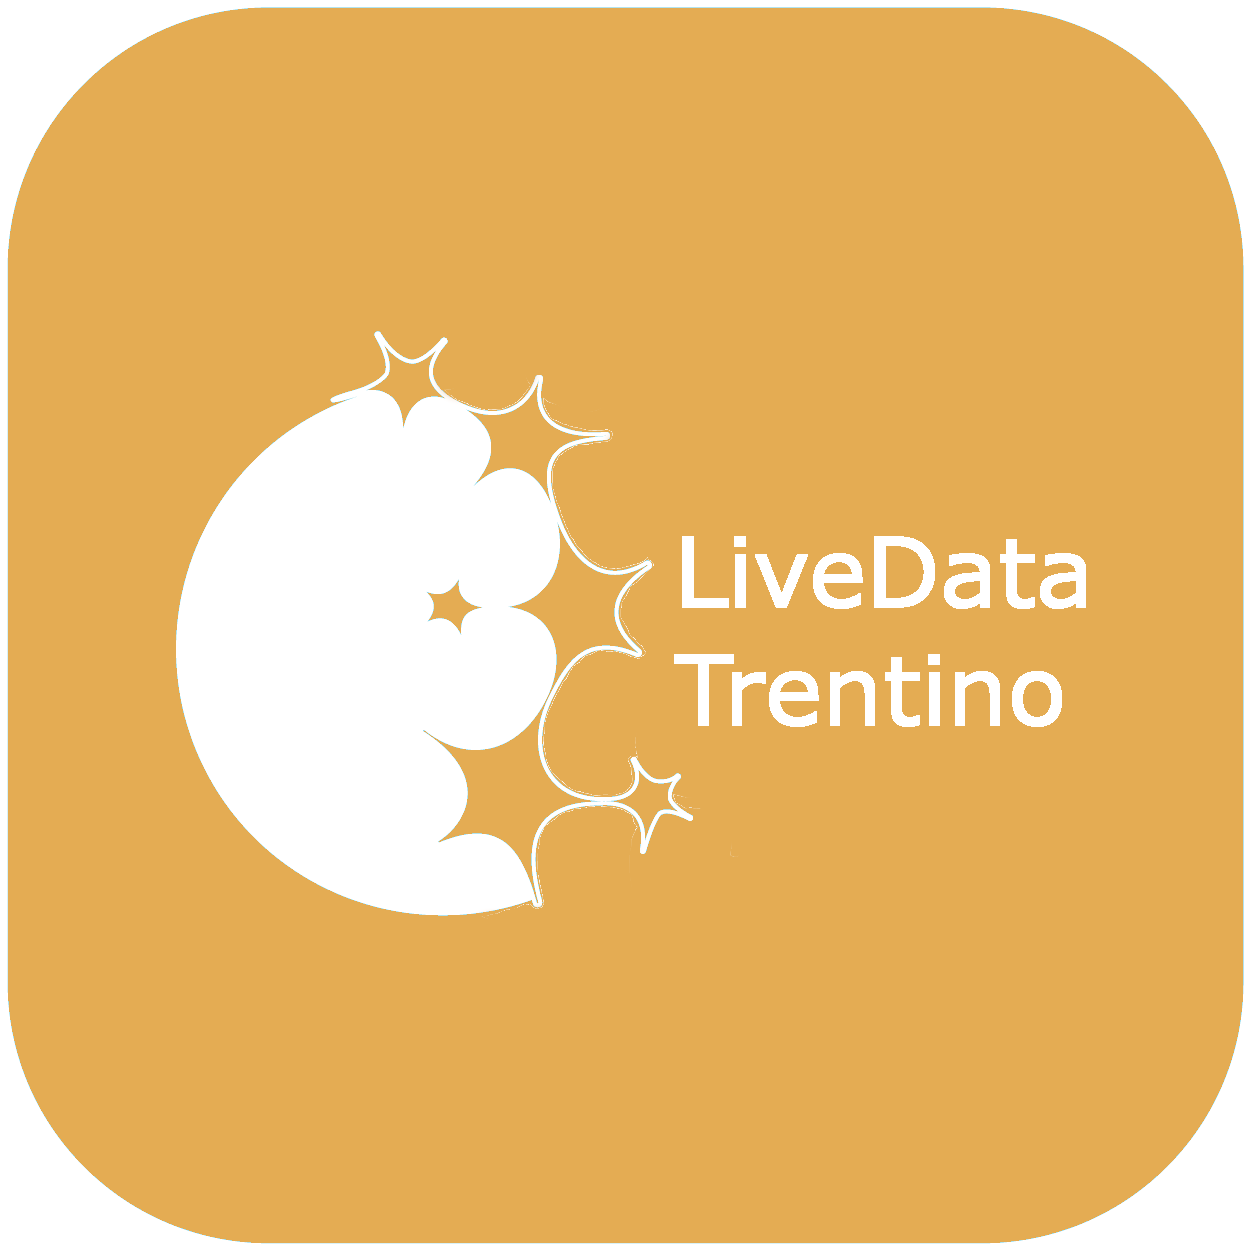 LivePeople Logo